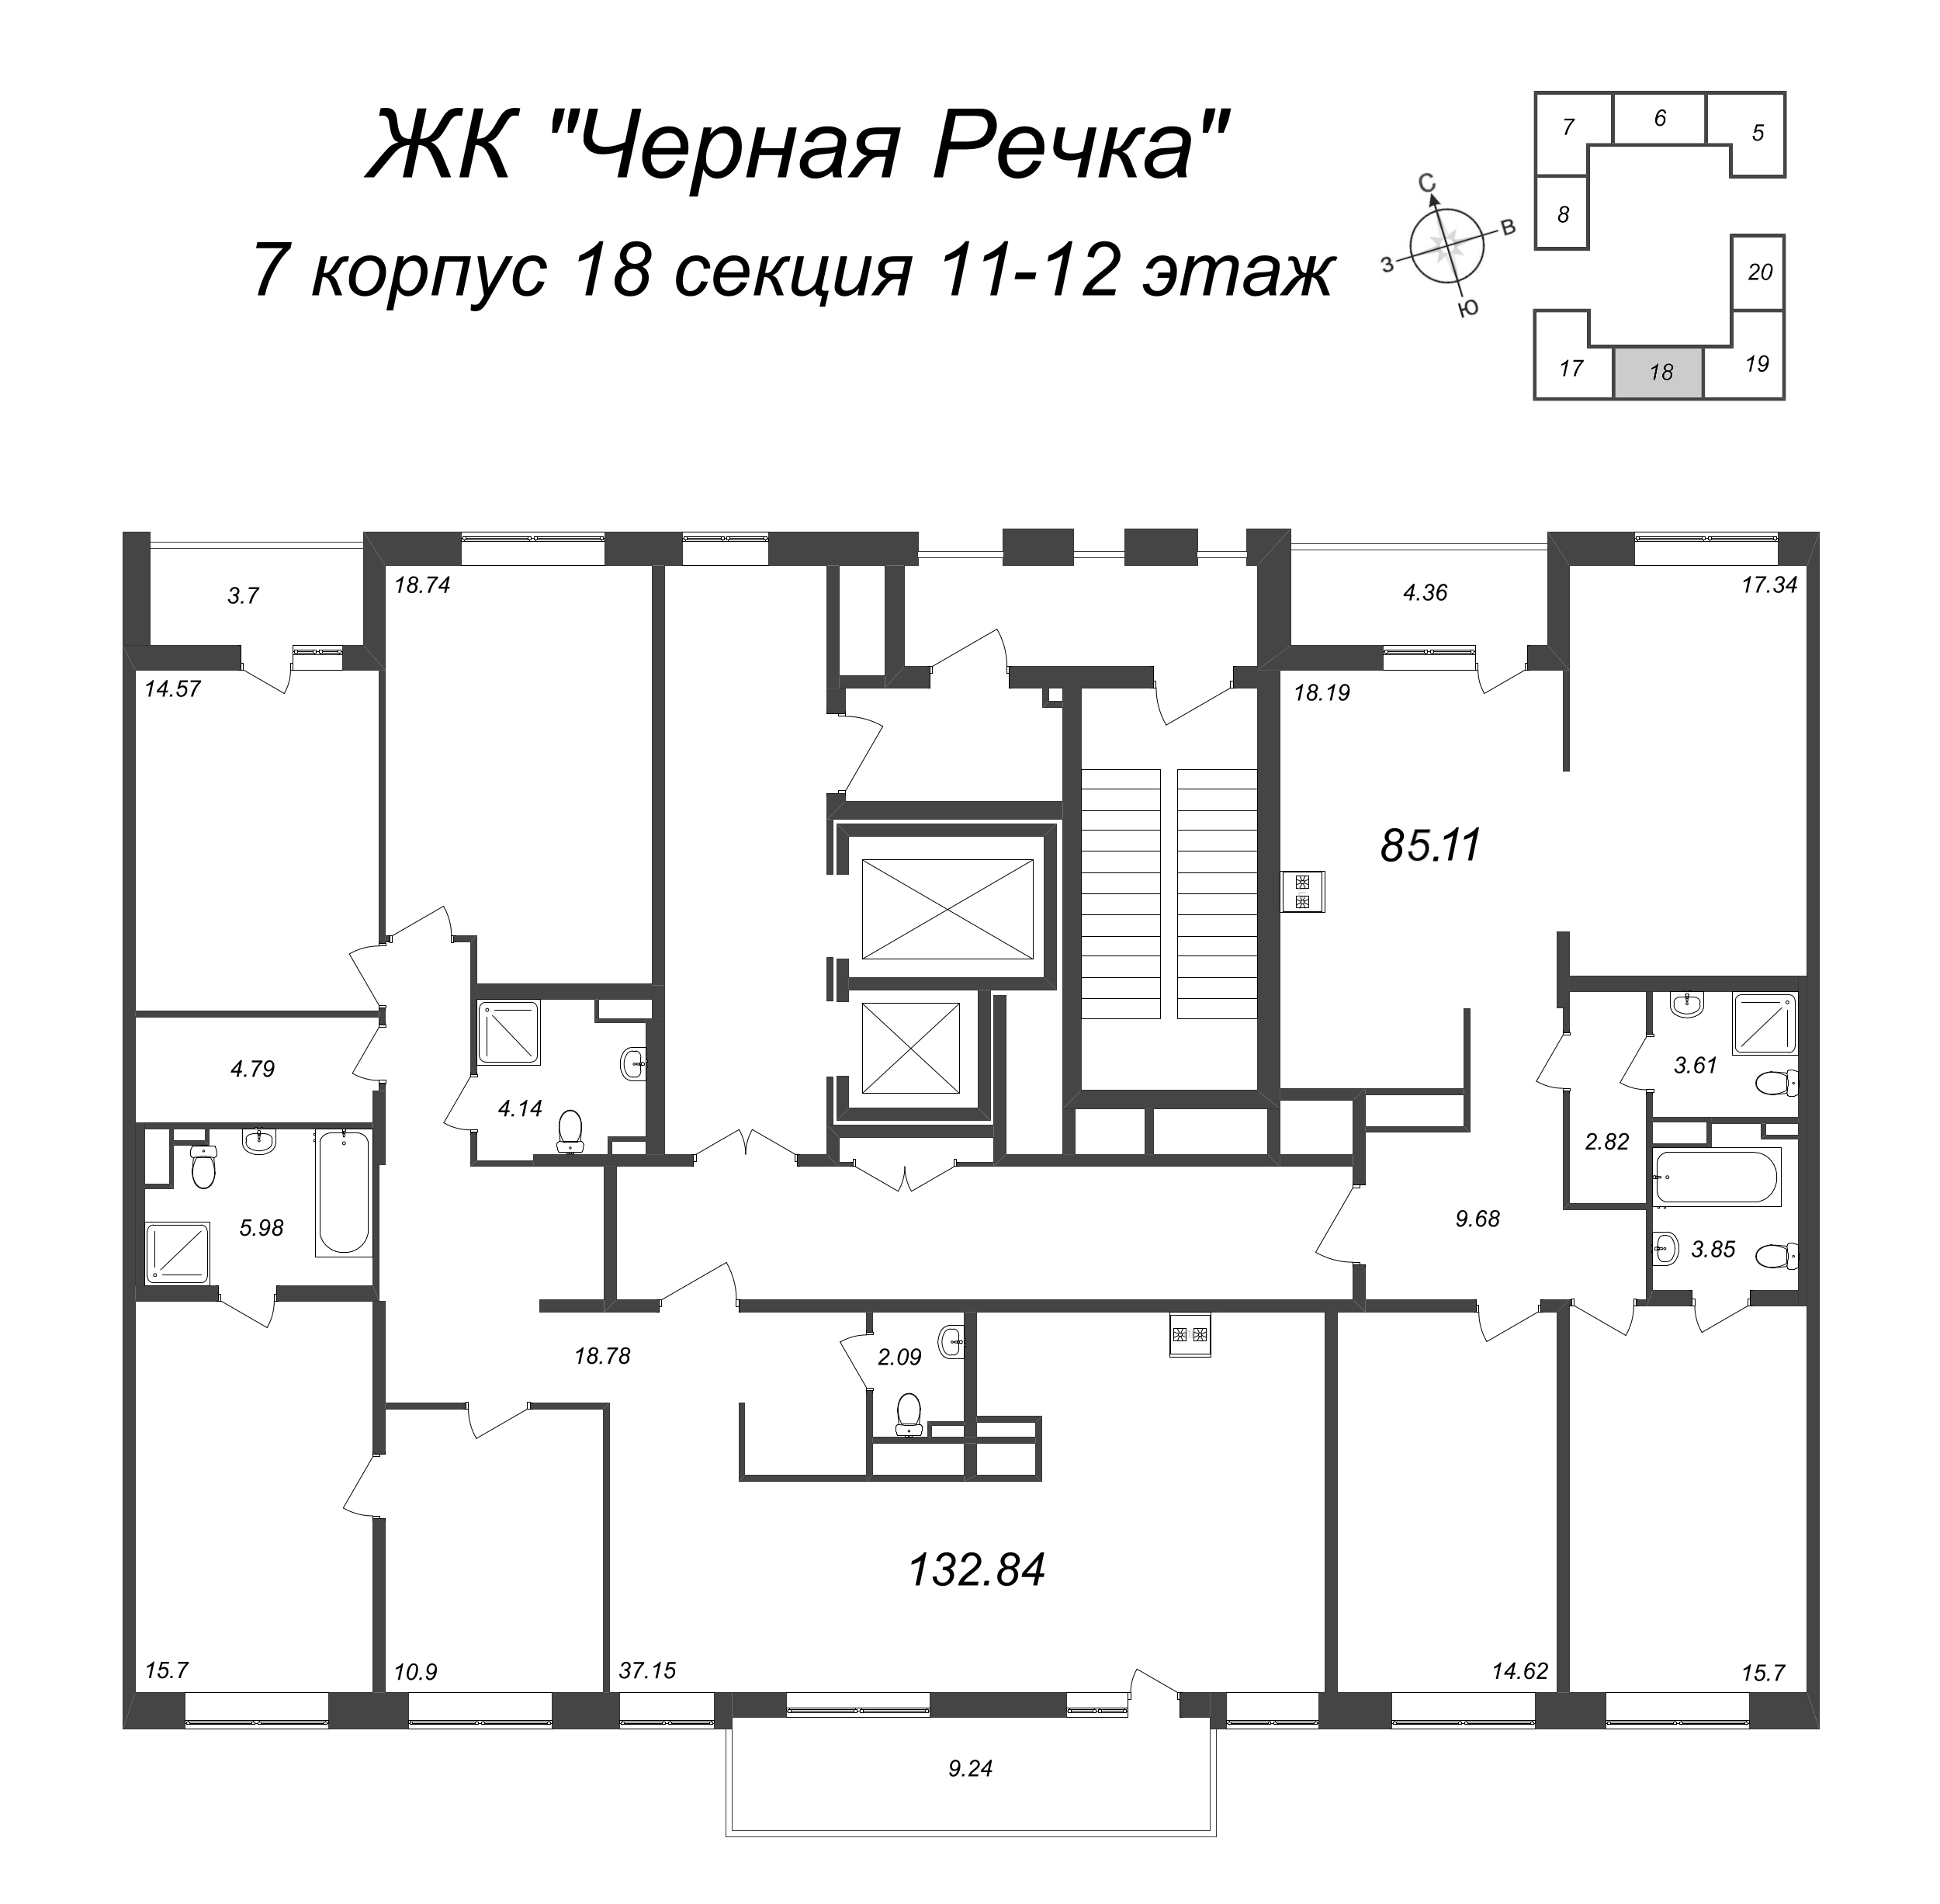 5-комнатная (Евро) квартира, 132.84 м² - планировка этажа